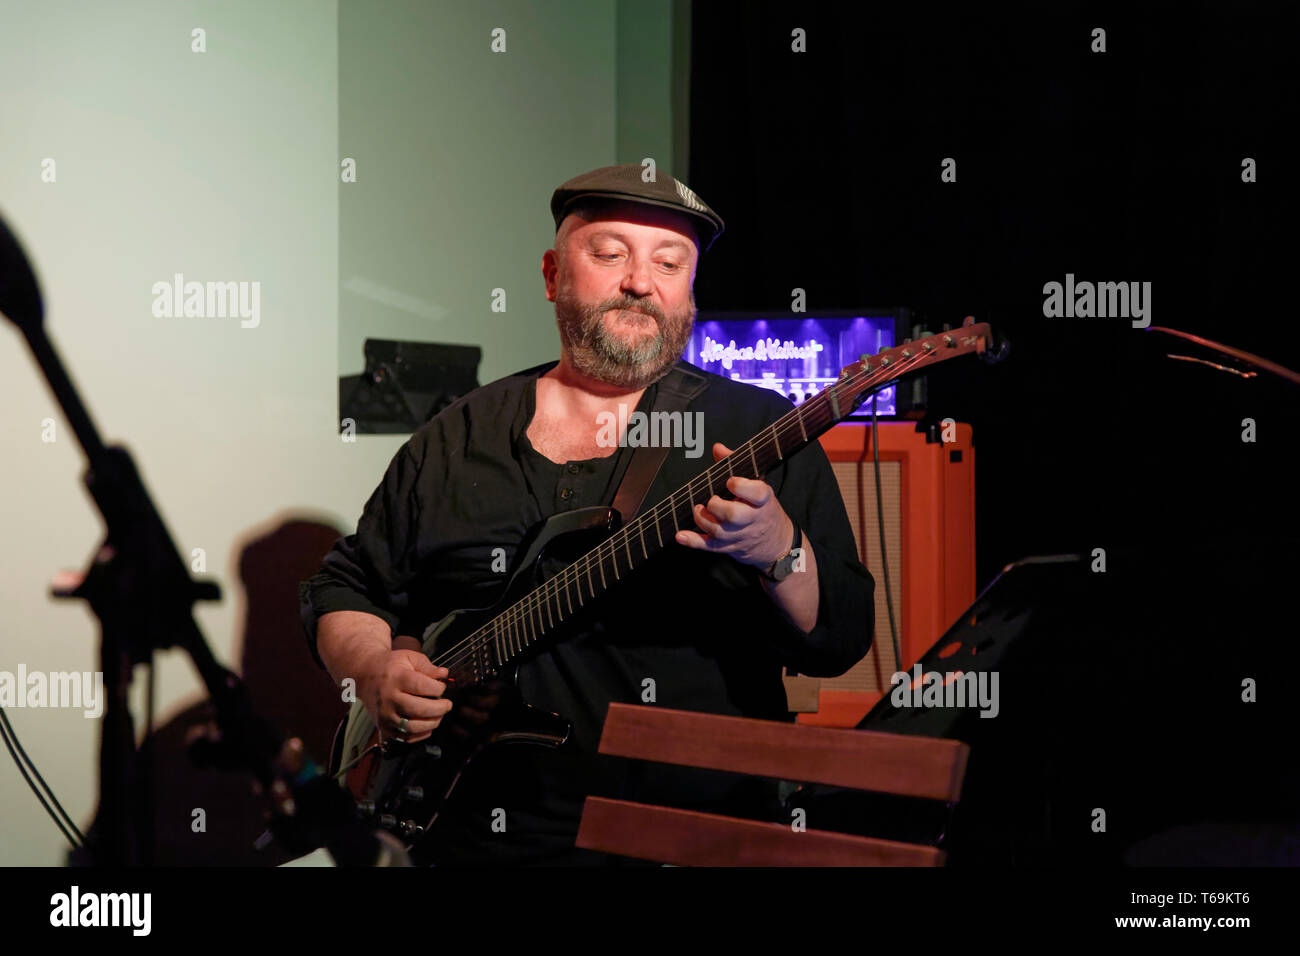 Laurent Hestin (Gitarre) im Konzert mit Ravy Magnifique im Maison Du  Passeur, Frankreich. Credit: Veronique Phitoussi/Alamy Stock Foto  Stockfotografie - Alamy